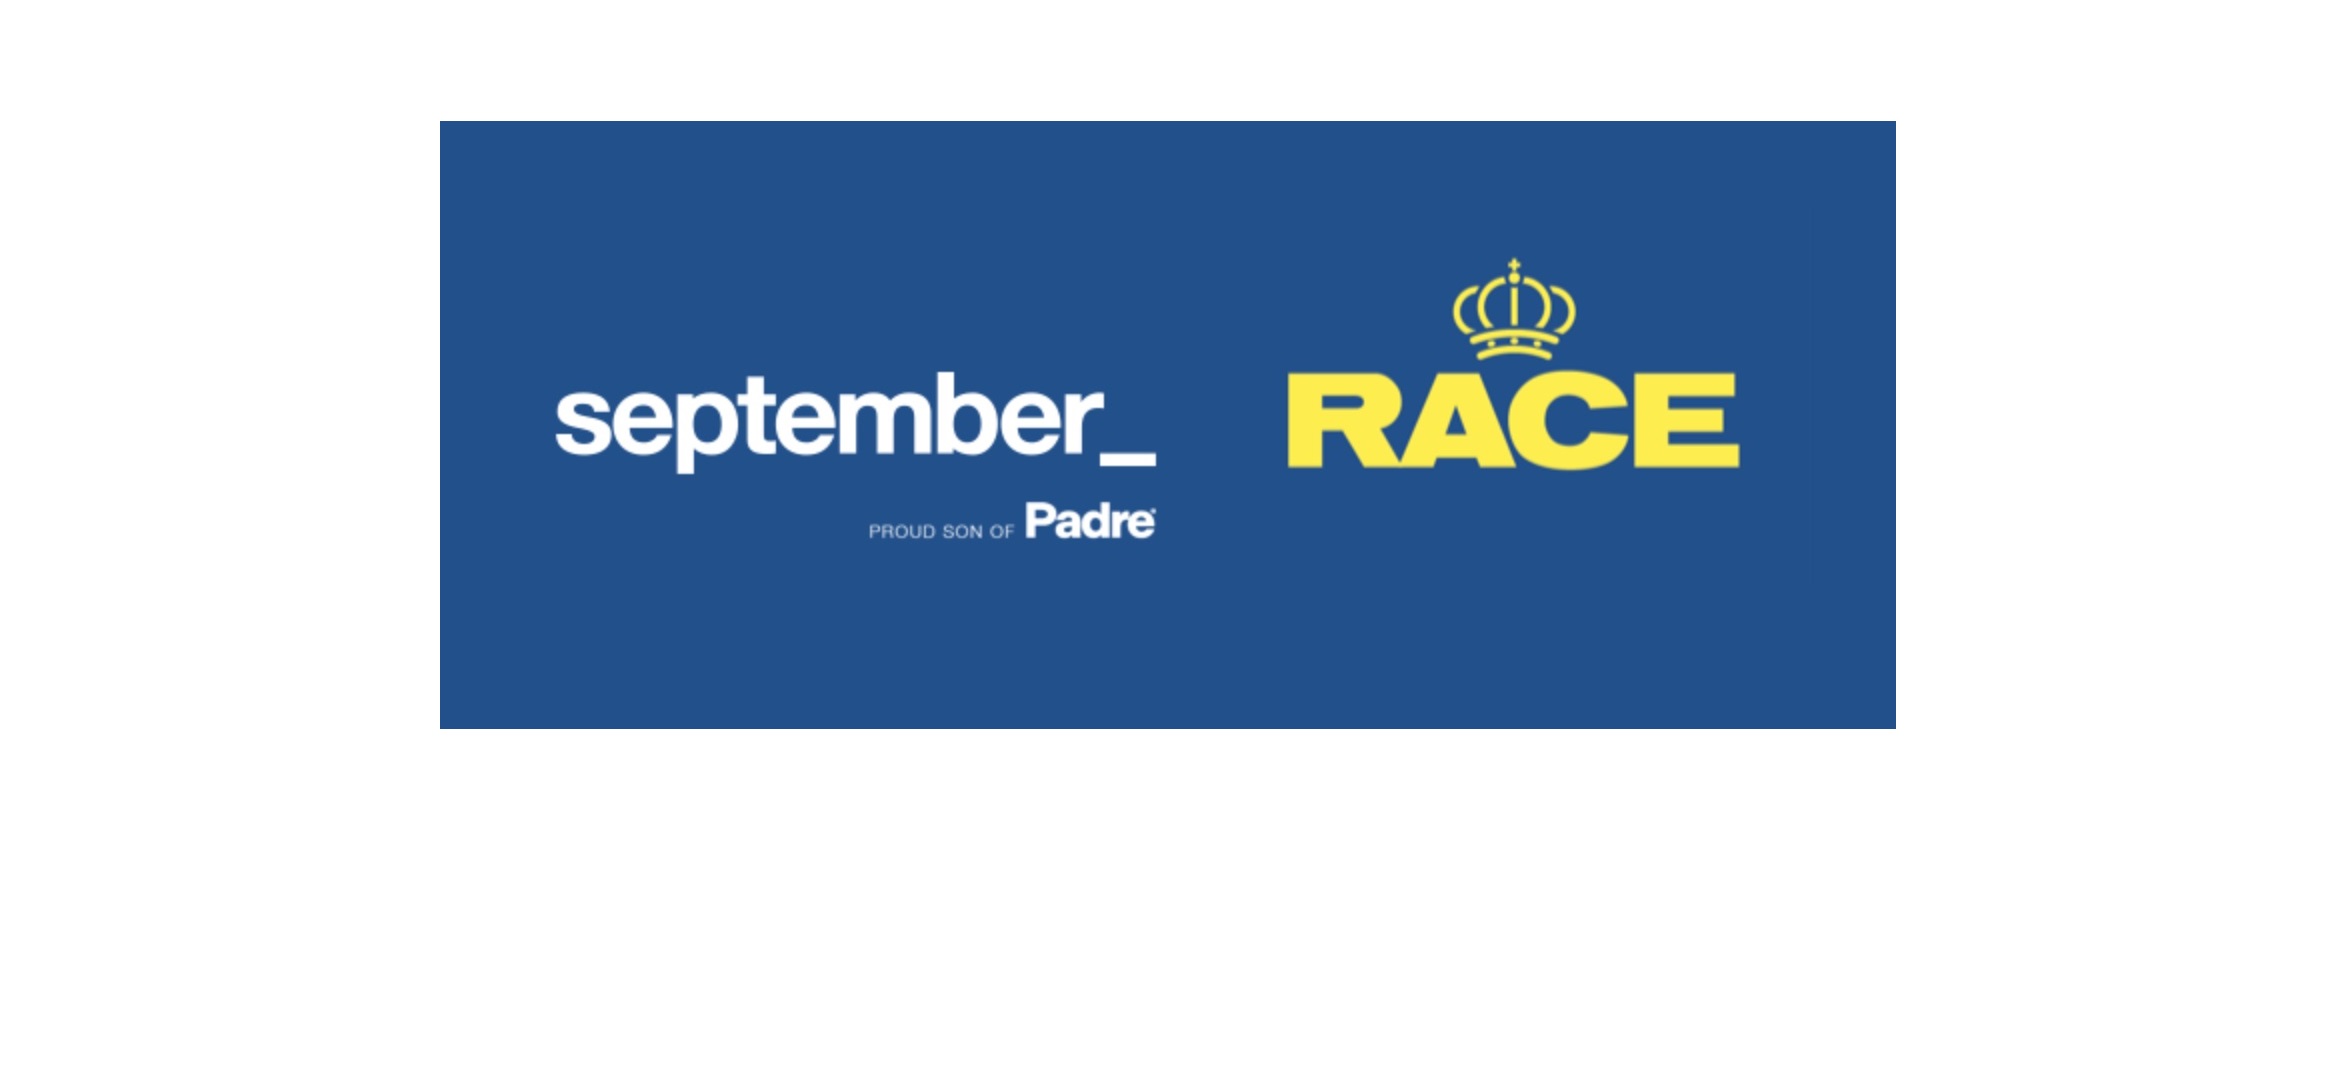 september, race, programapublicidad